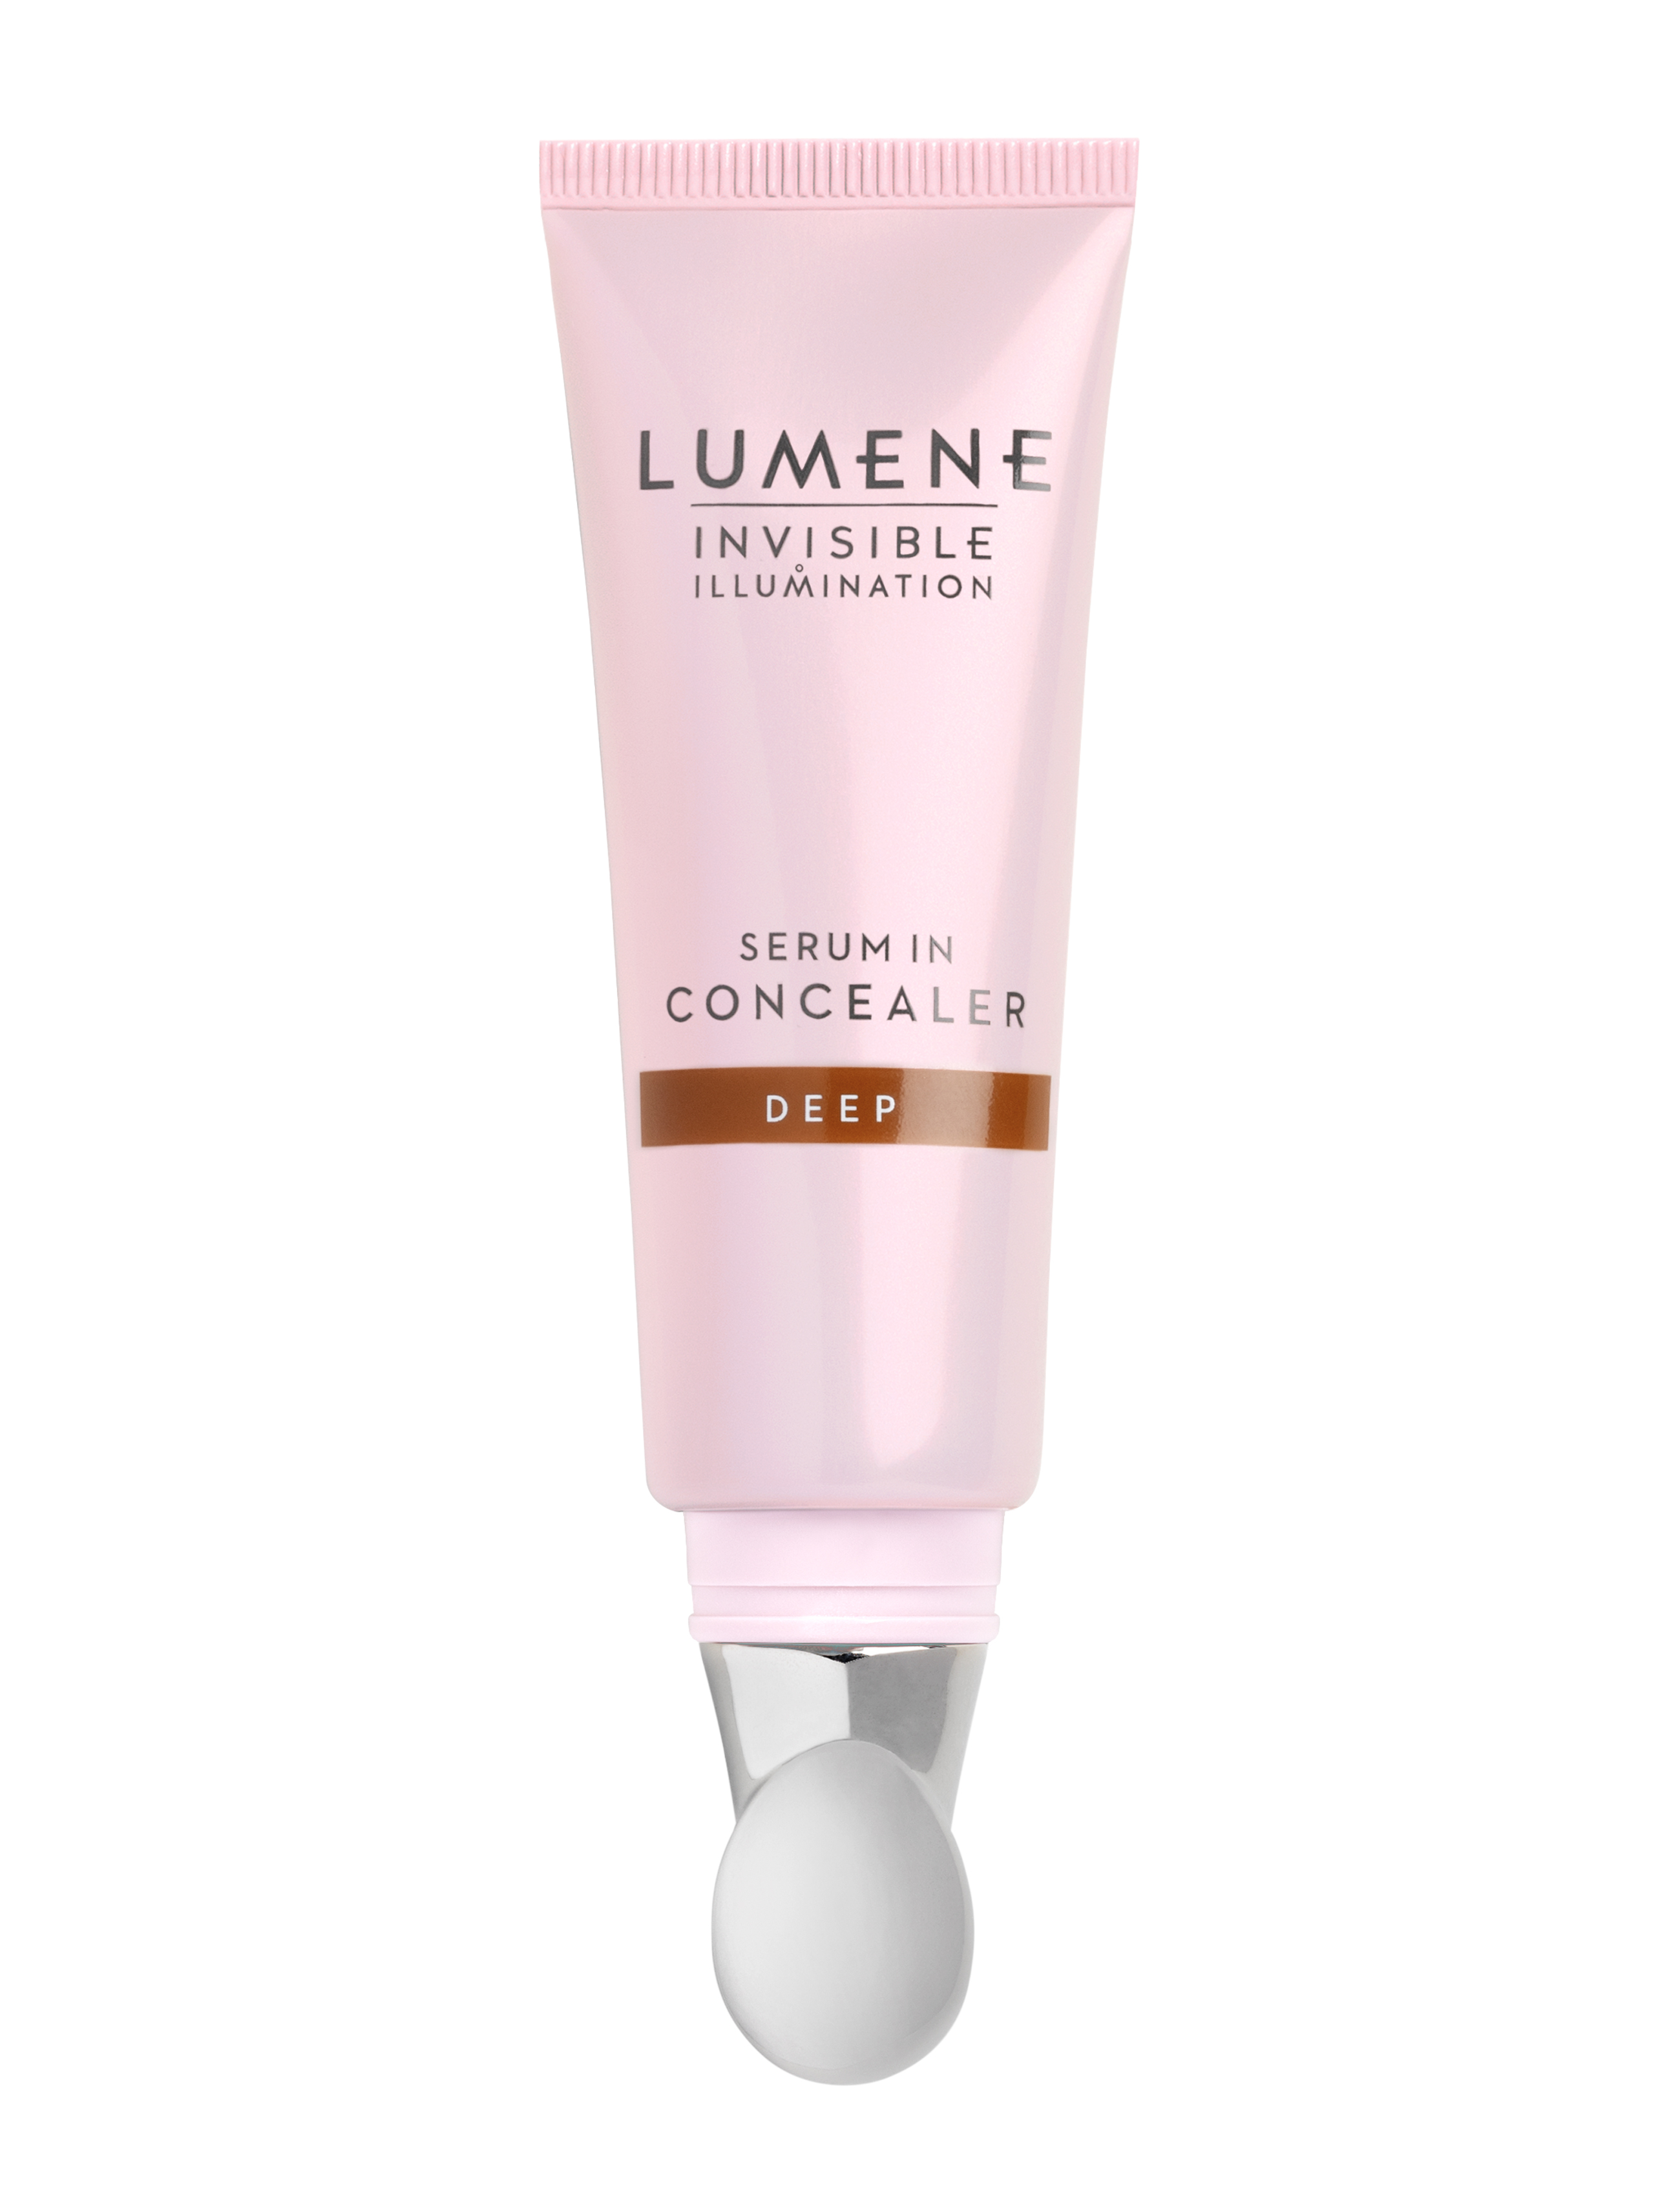 Lumene Invisible Illumination Serum In Concealer, Deep, 10 ml